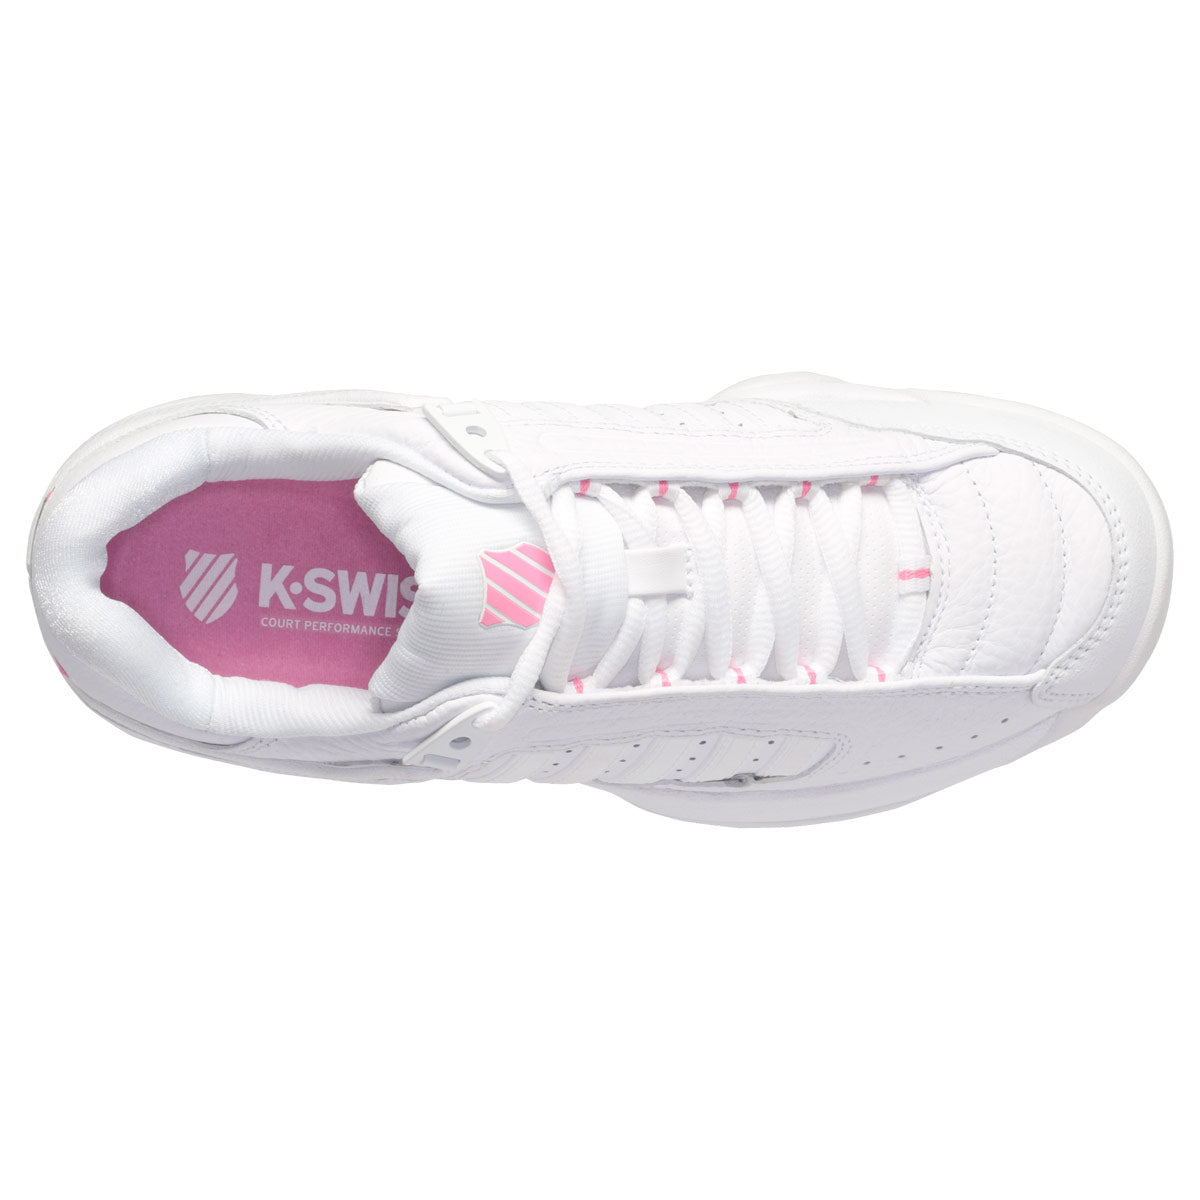 K-Swiss Defier RS Womens Tennis Shoes - White-Sachet Pink